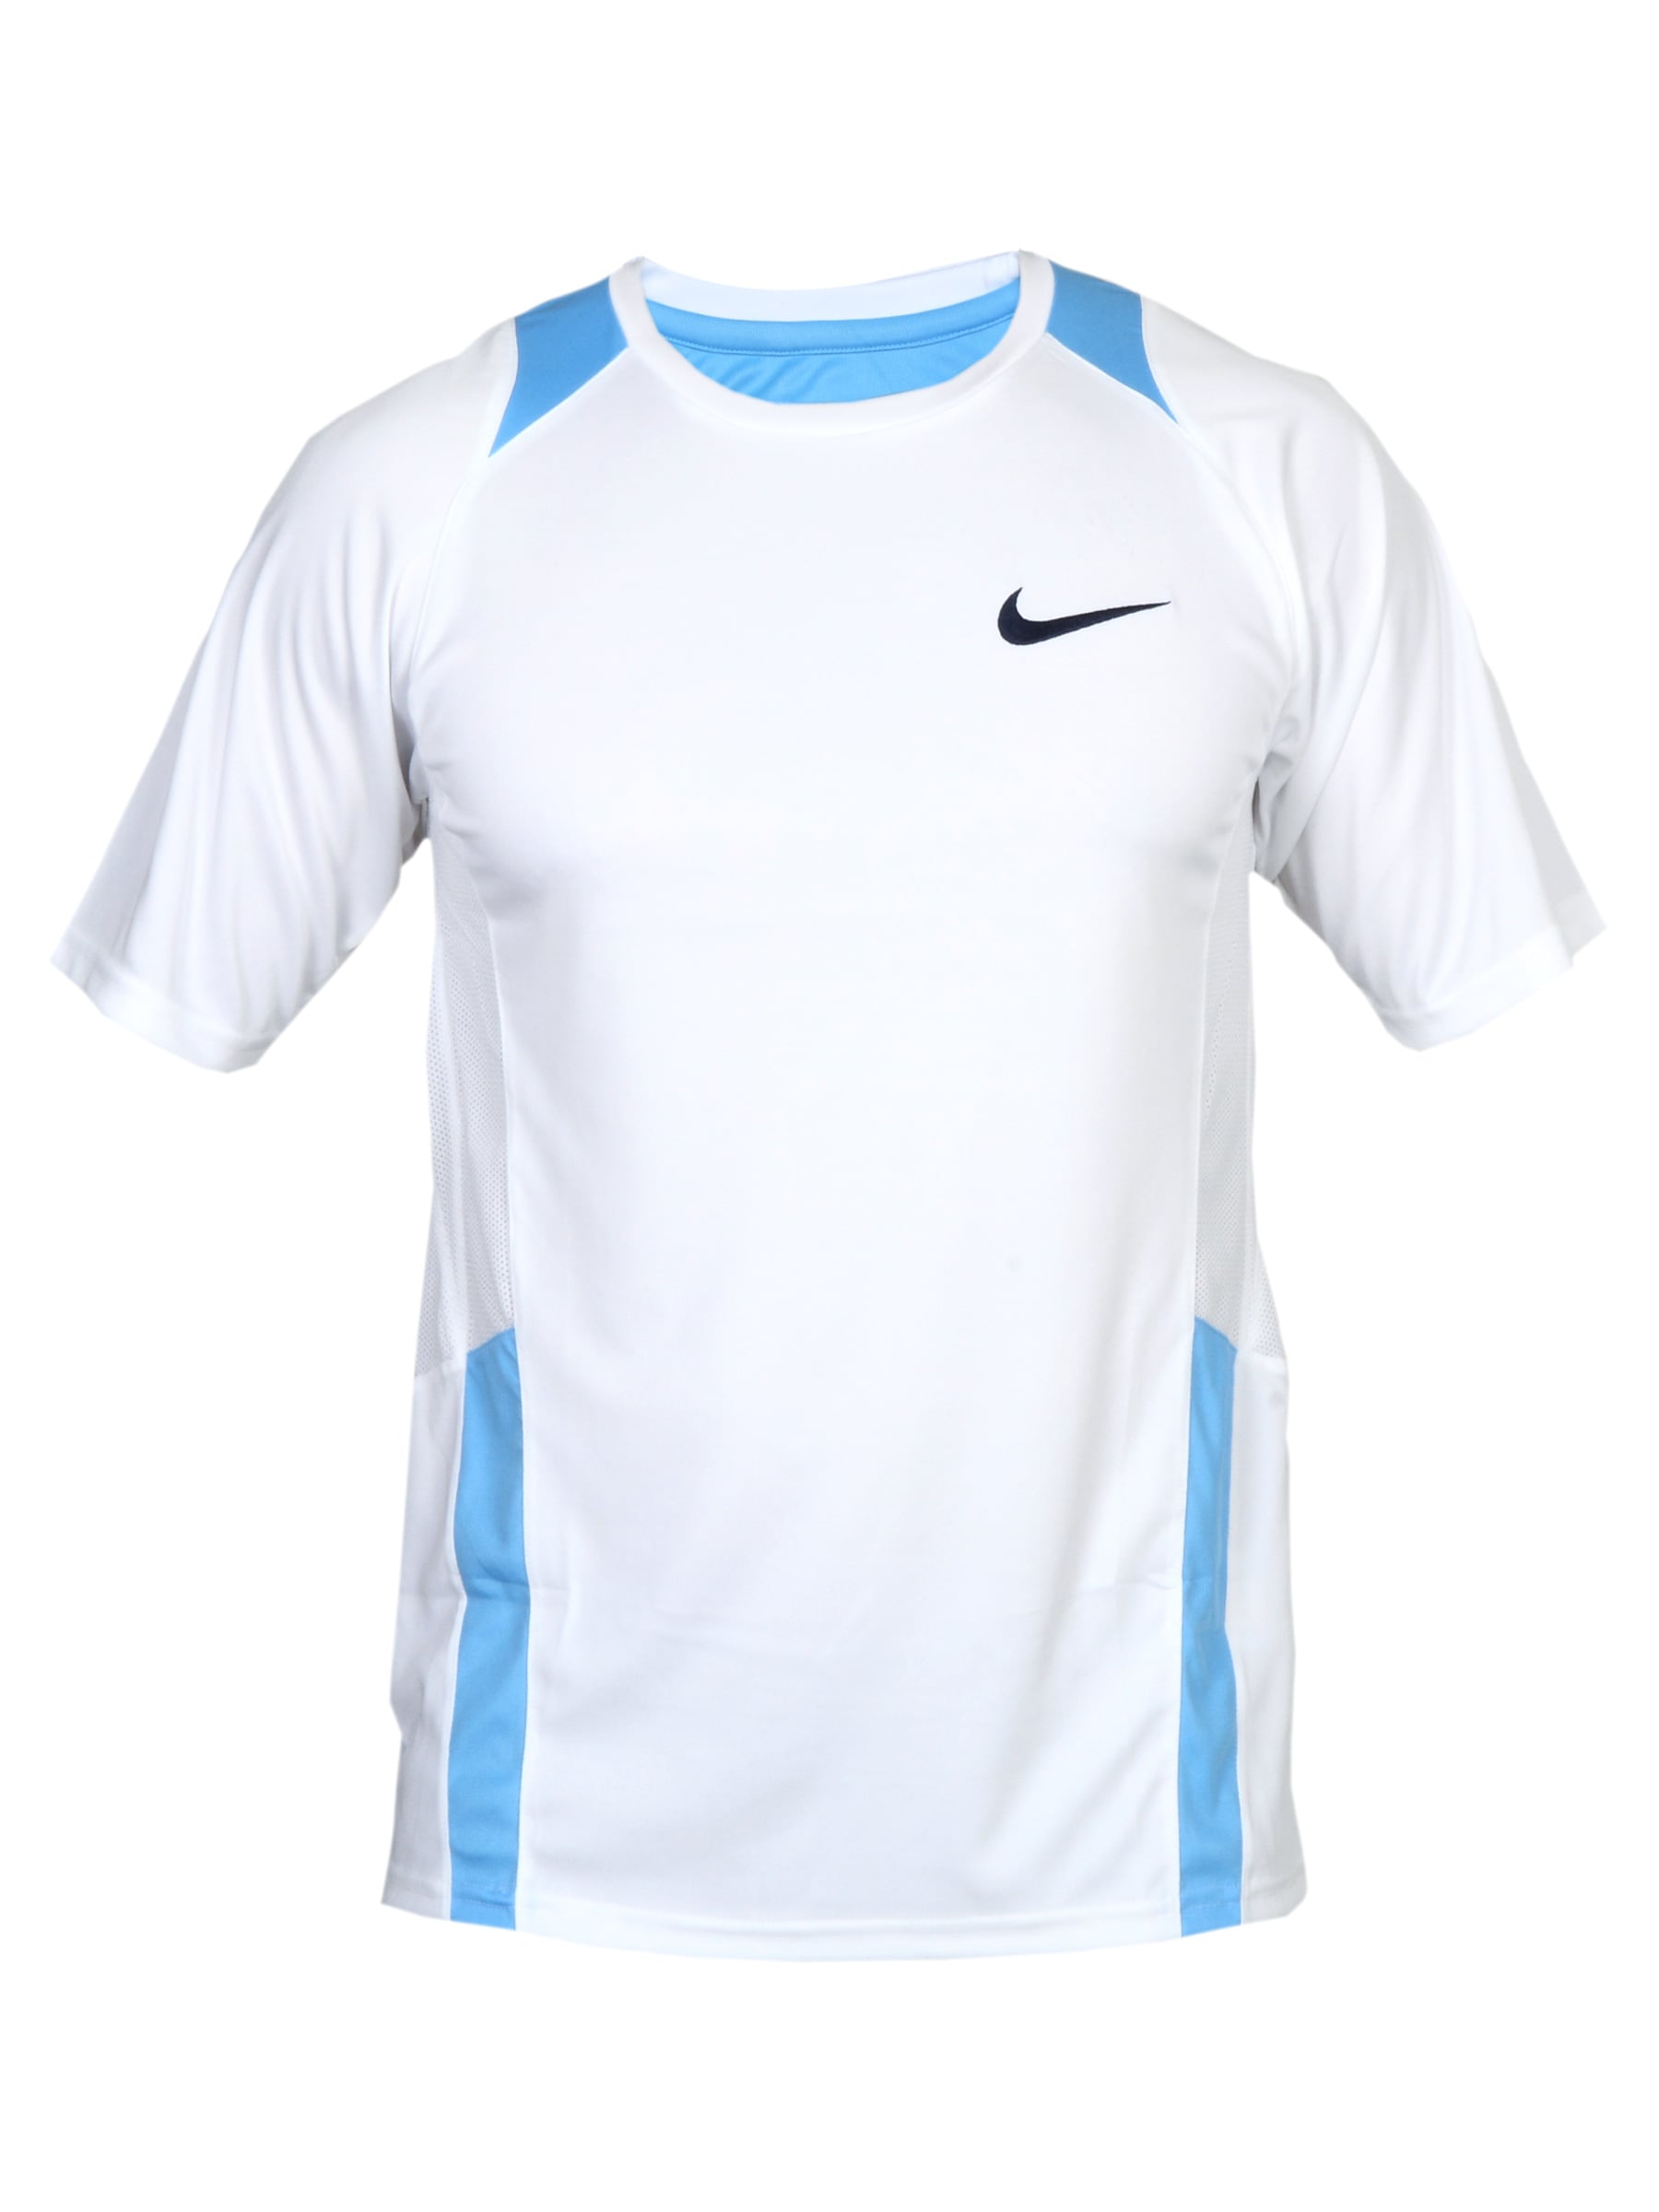 Nike Men's Training White Blue T-shirt